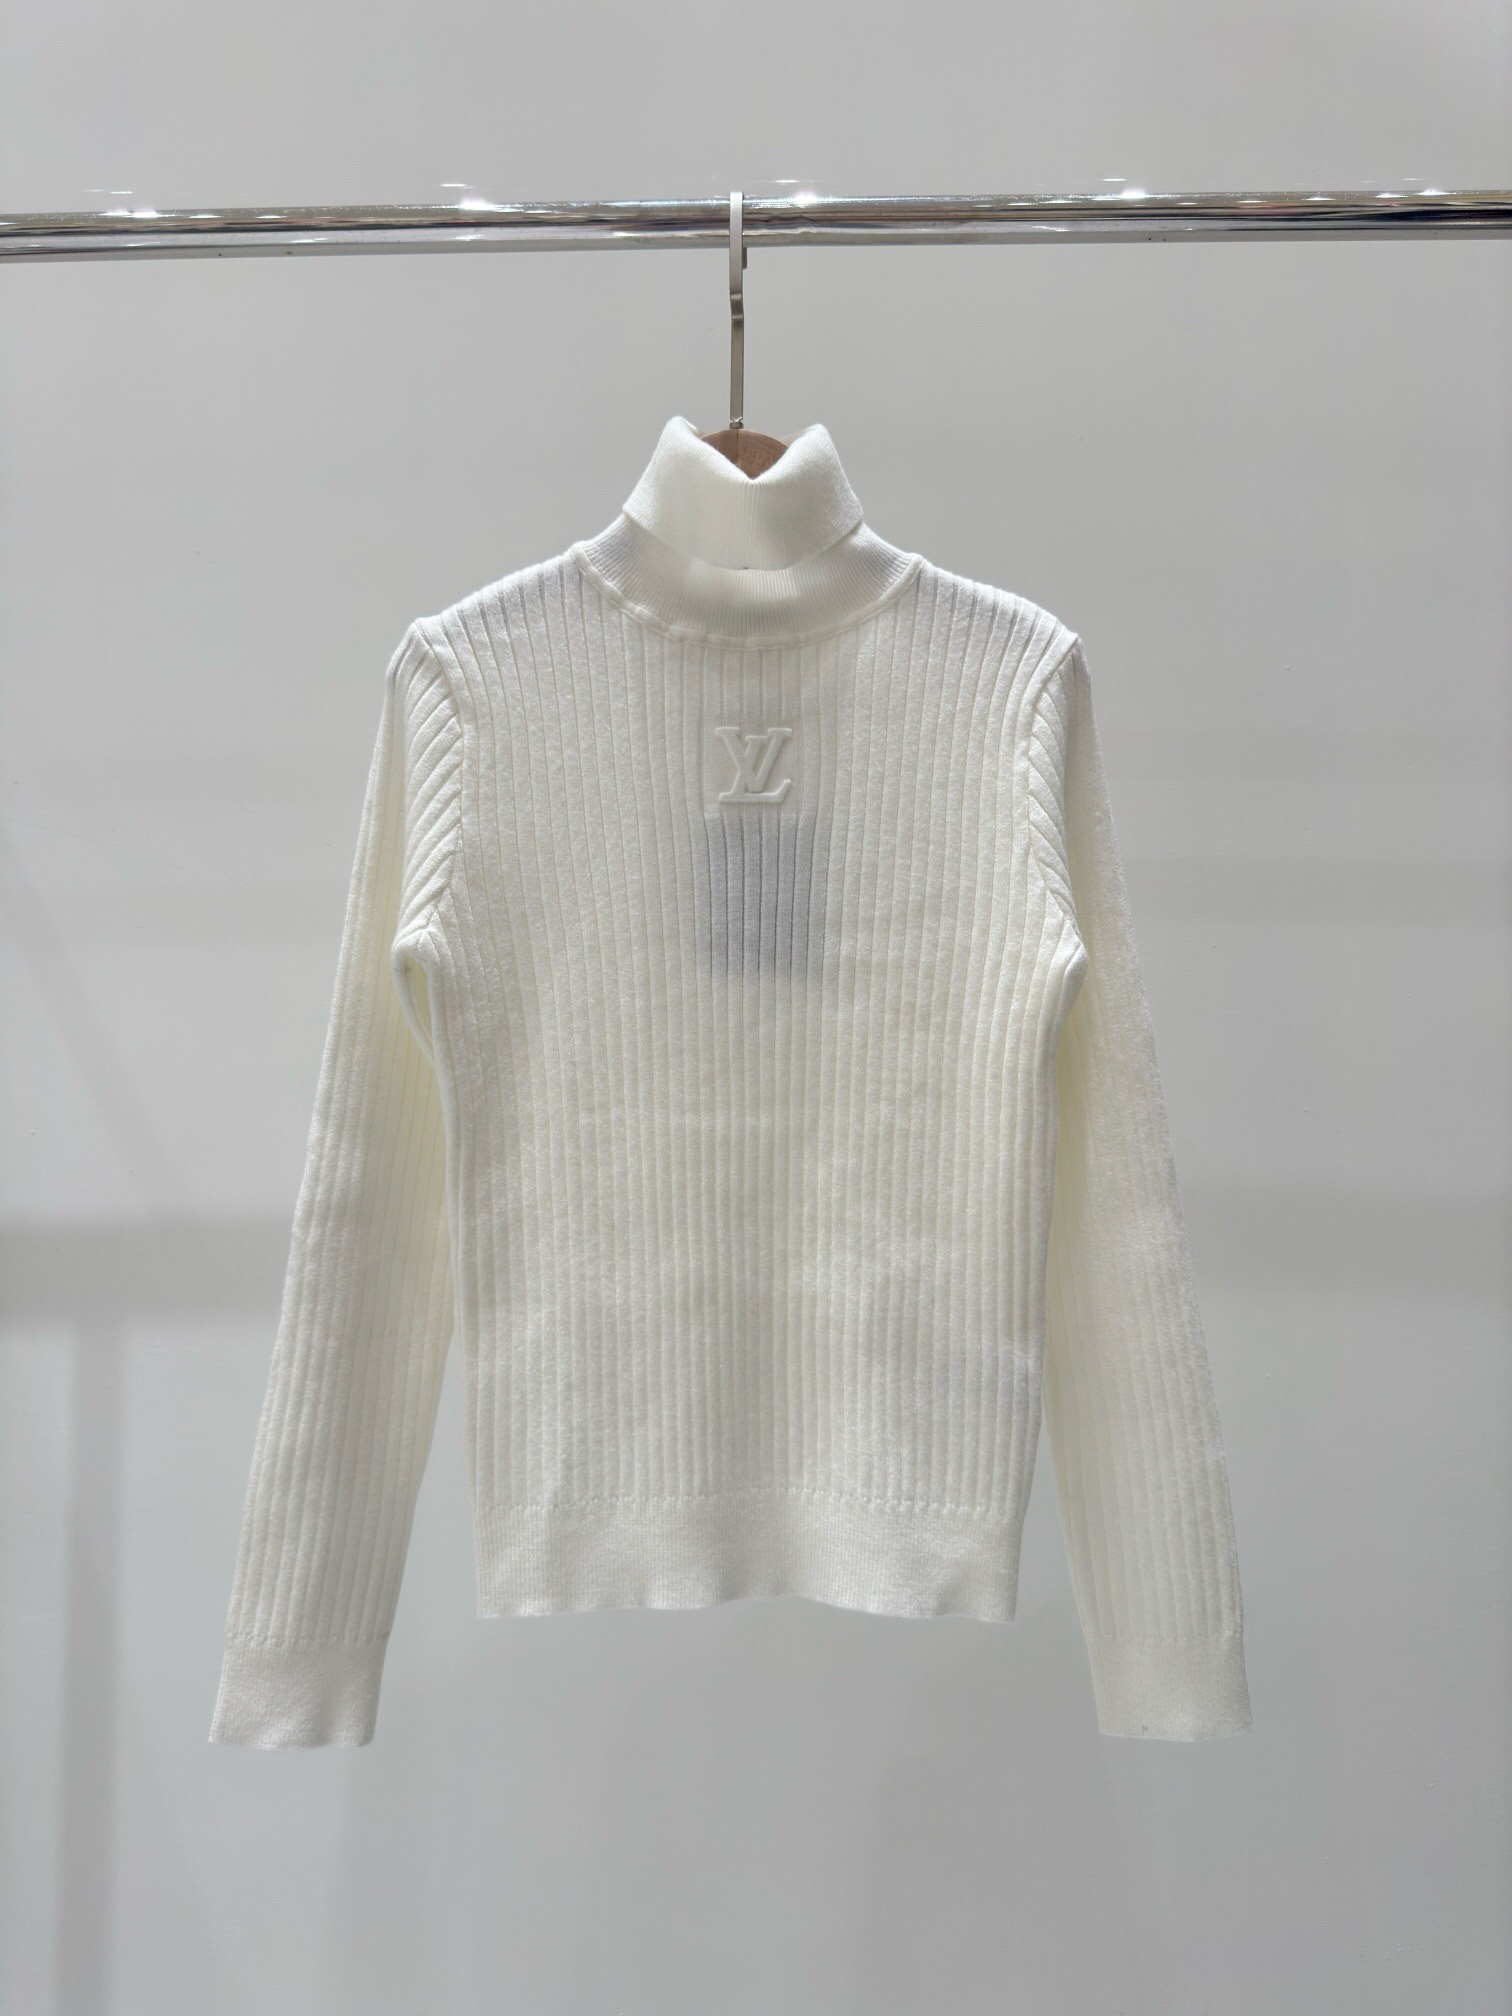 Louis Vuitton Clothing Knit Sweater Sweatshirts Black Brick Red White Knitting Wool Fall/Winter Collection